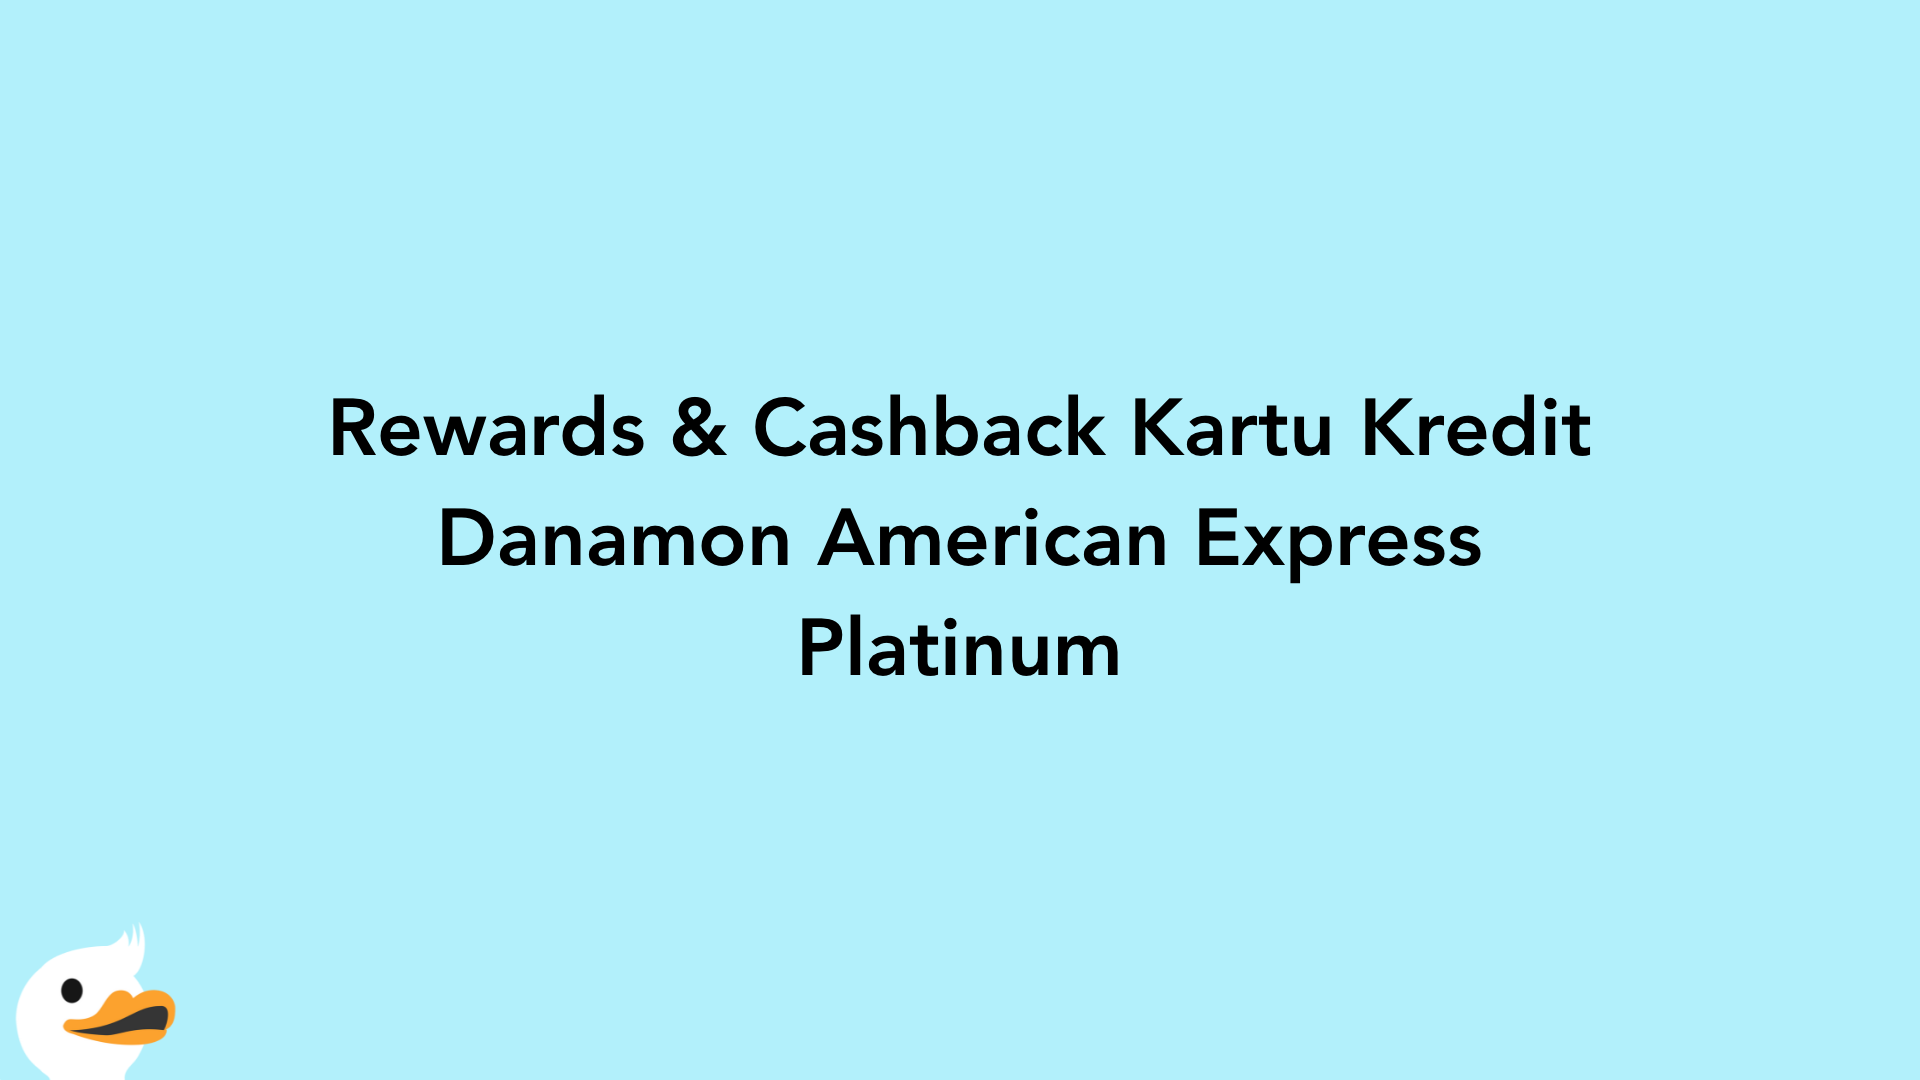 Rewards & Cashback Kartu Kredit Danamon American Express Platinum